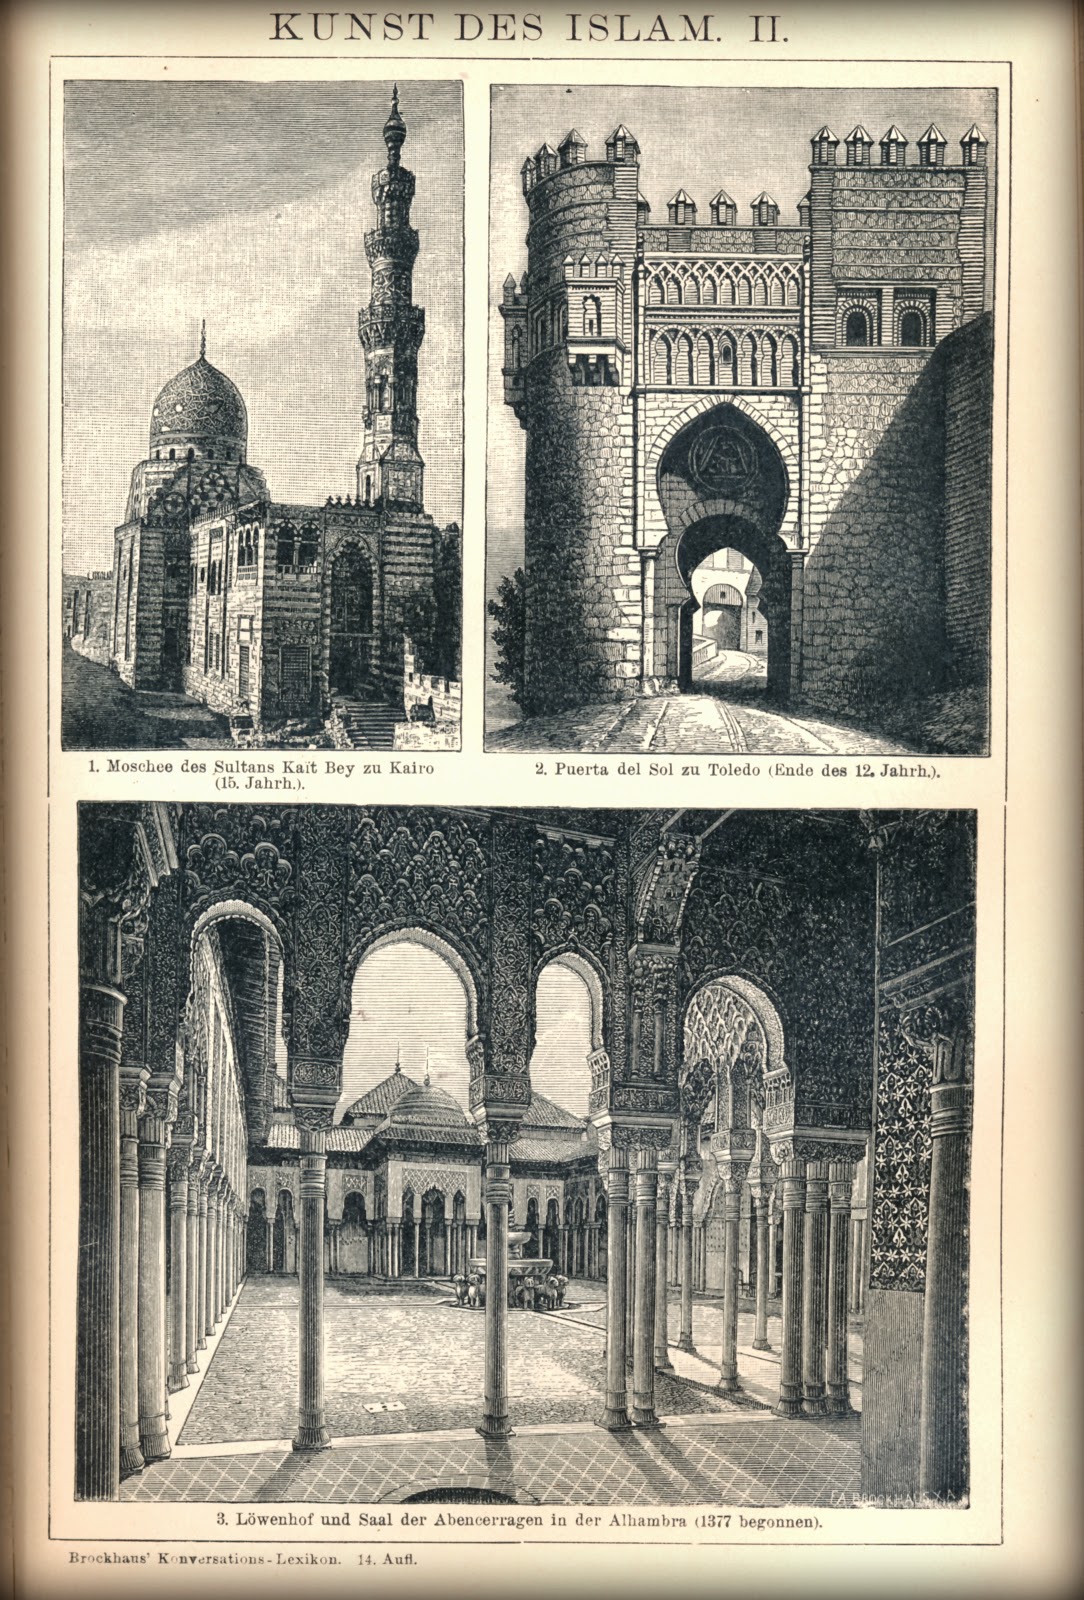 Beide Bildtafeln "Kunst des Islam" aus Brockhaus Konversationslexikon 1906